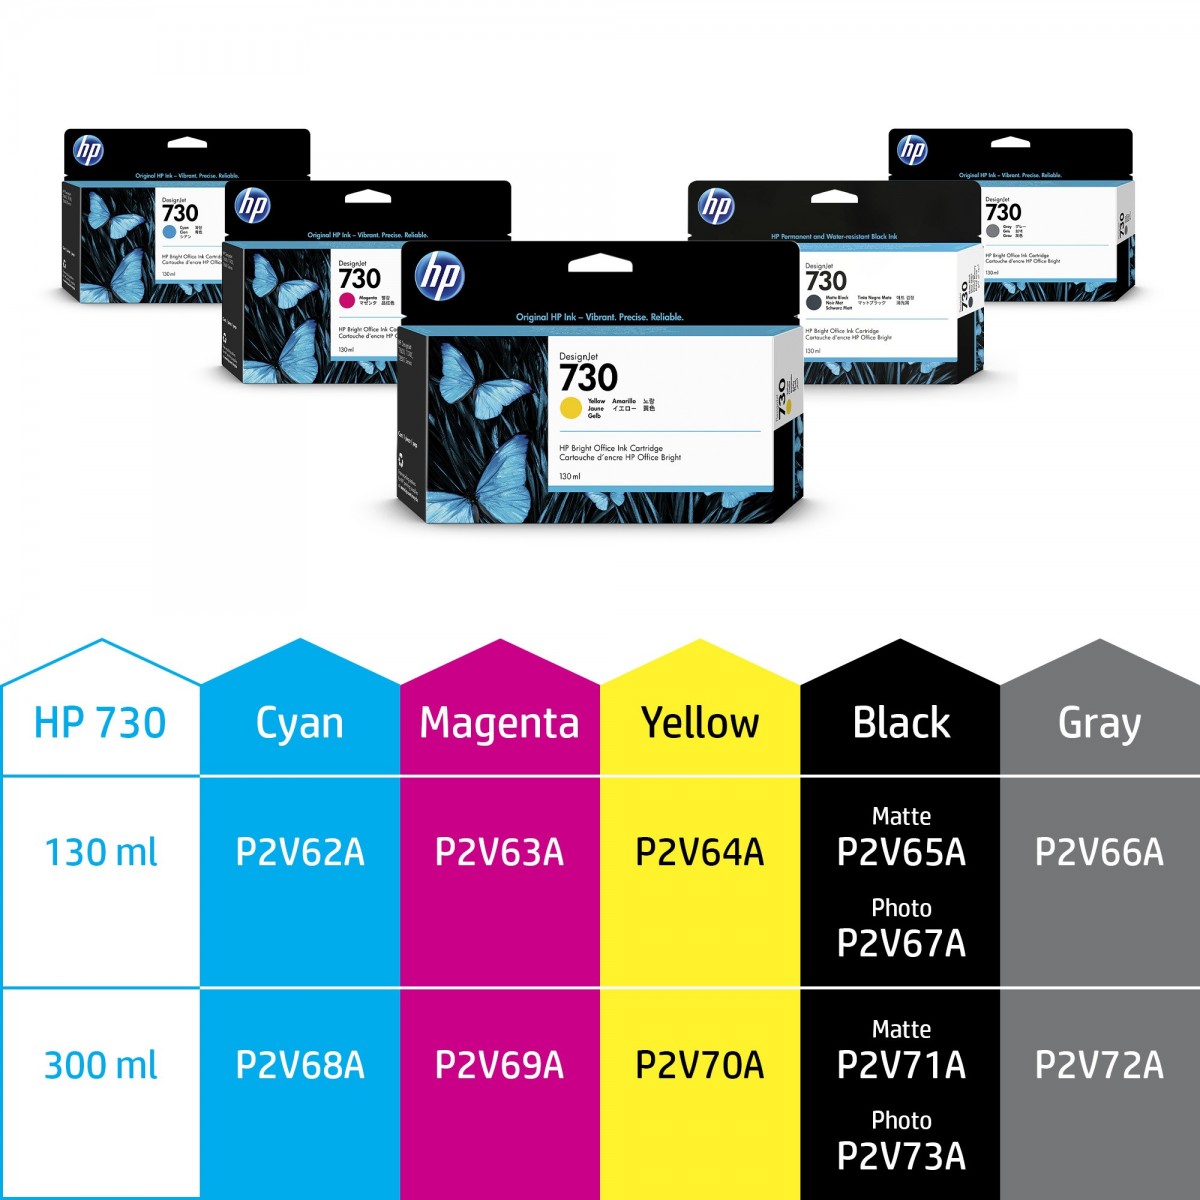 HP 730 300-ml Cyan DesignJet Ink Cartridge - Dye-based ink - 300 ml - 1 pc(s)